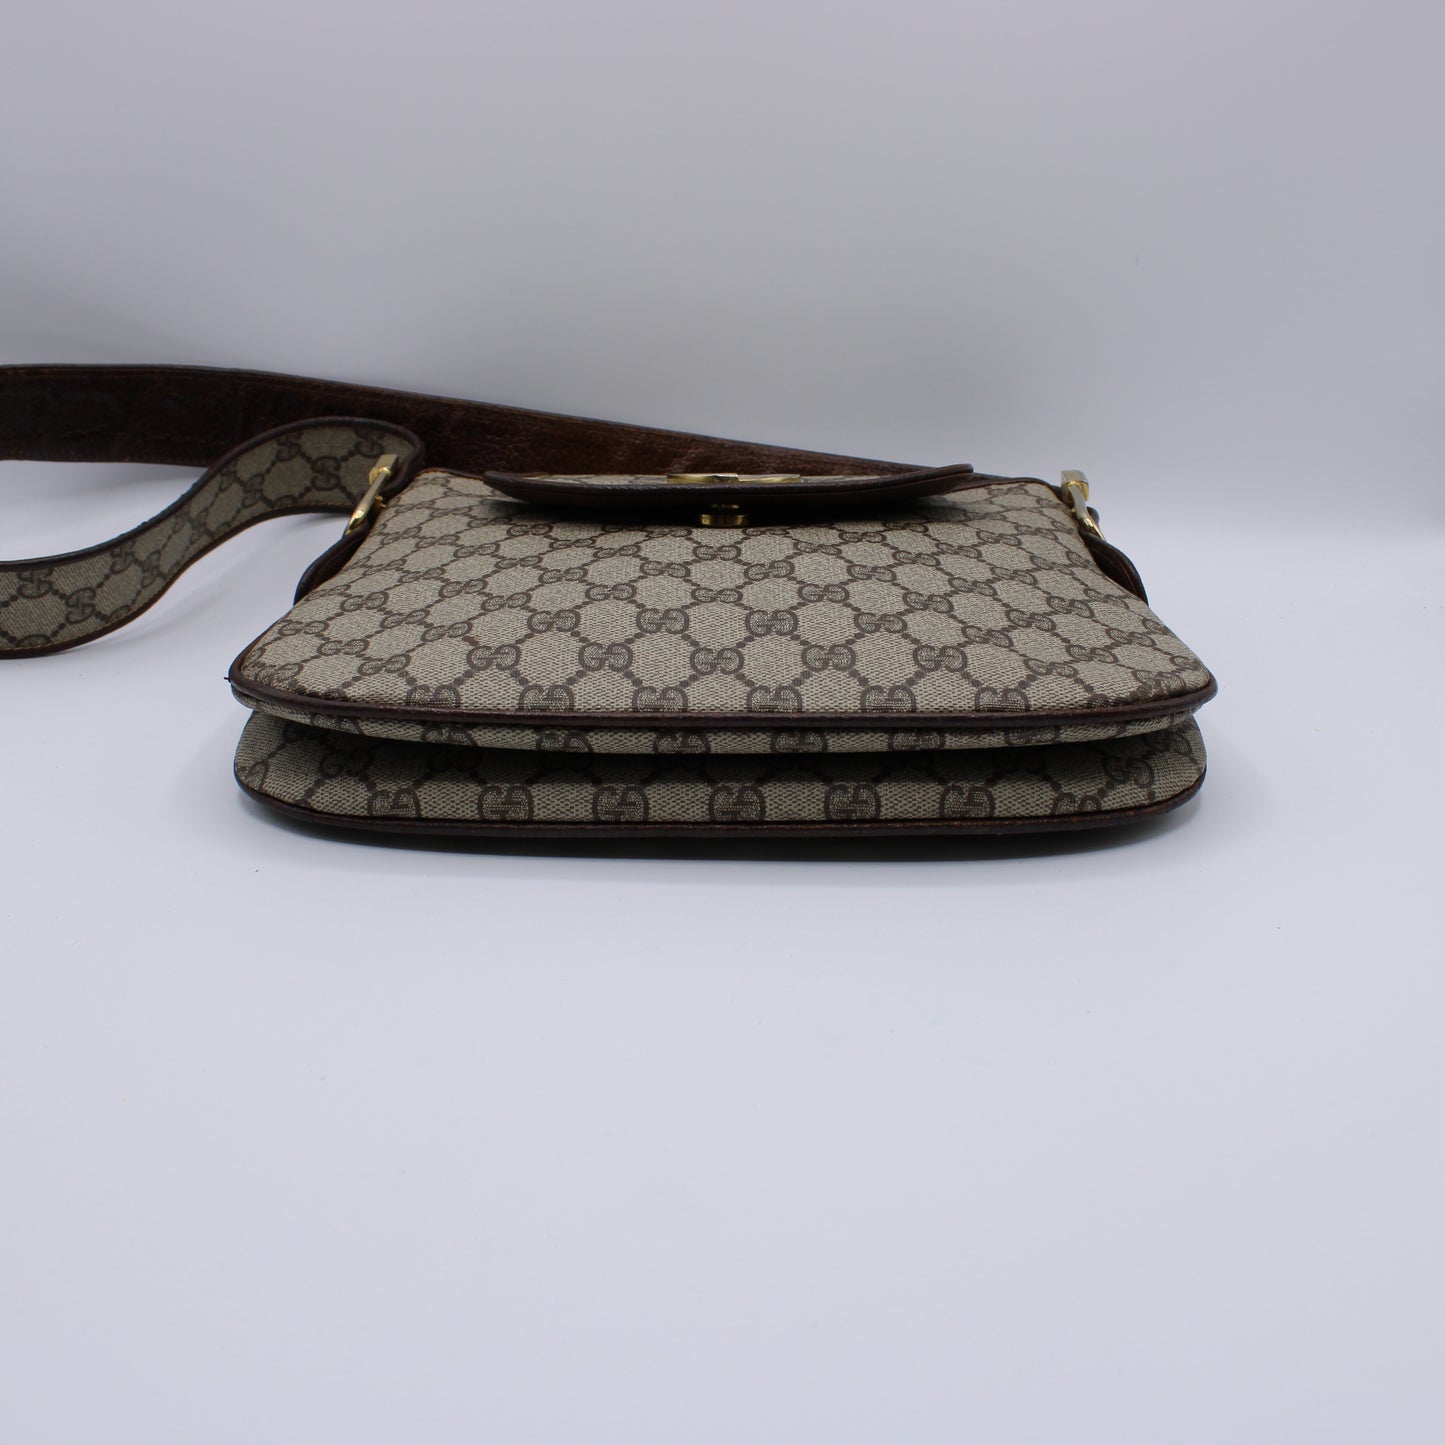 Gucci GG Canvas and Leather Flap Shoulder Bag Vintage